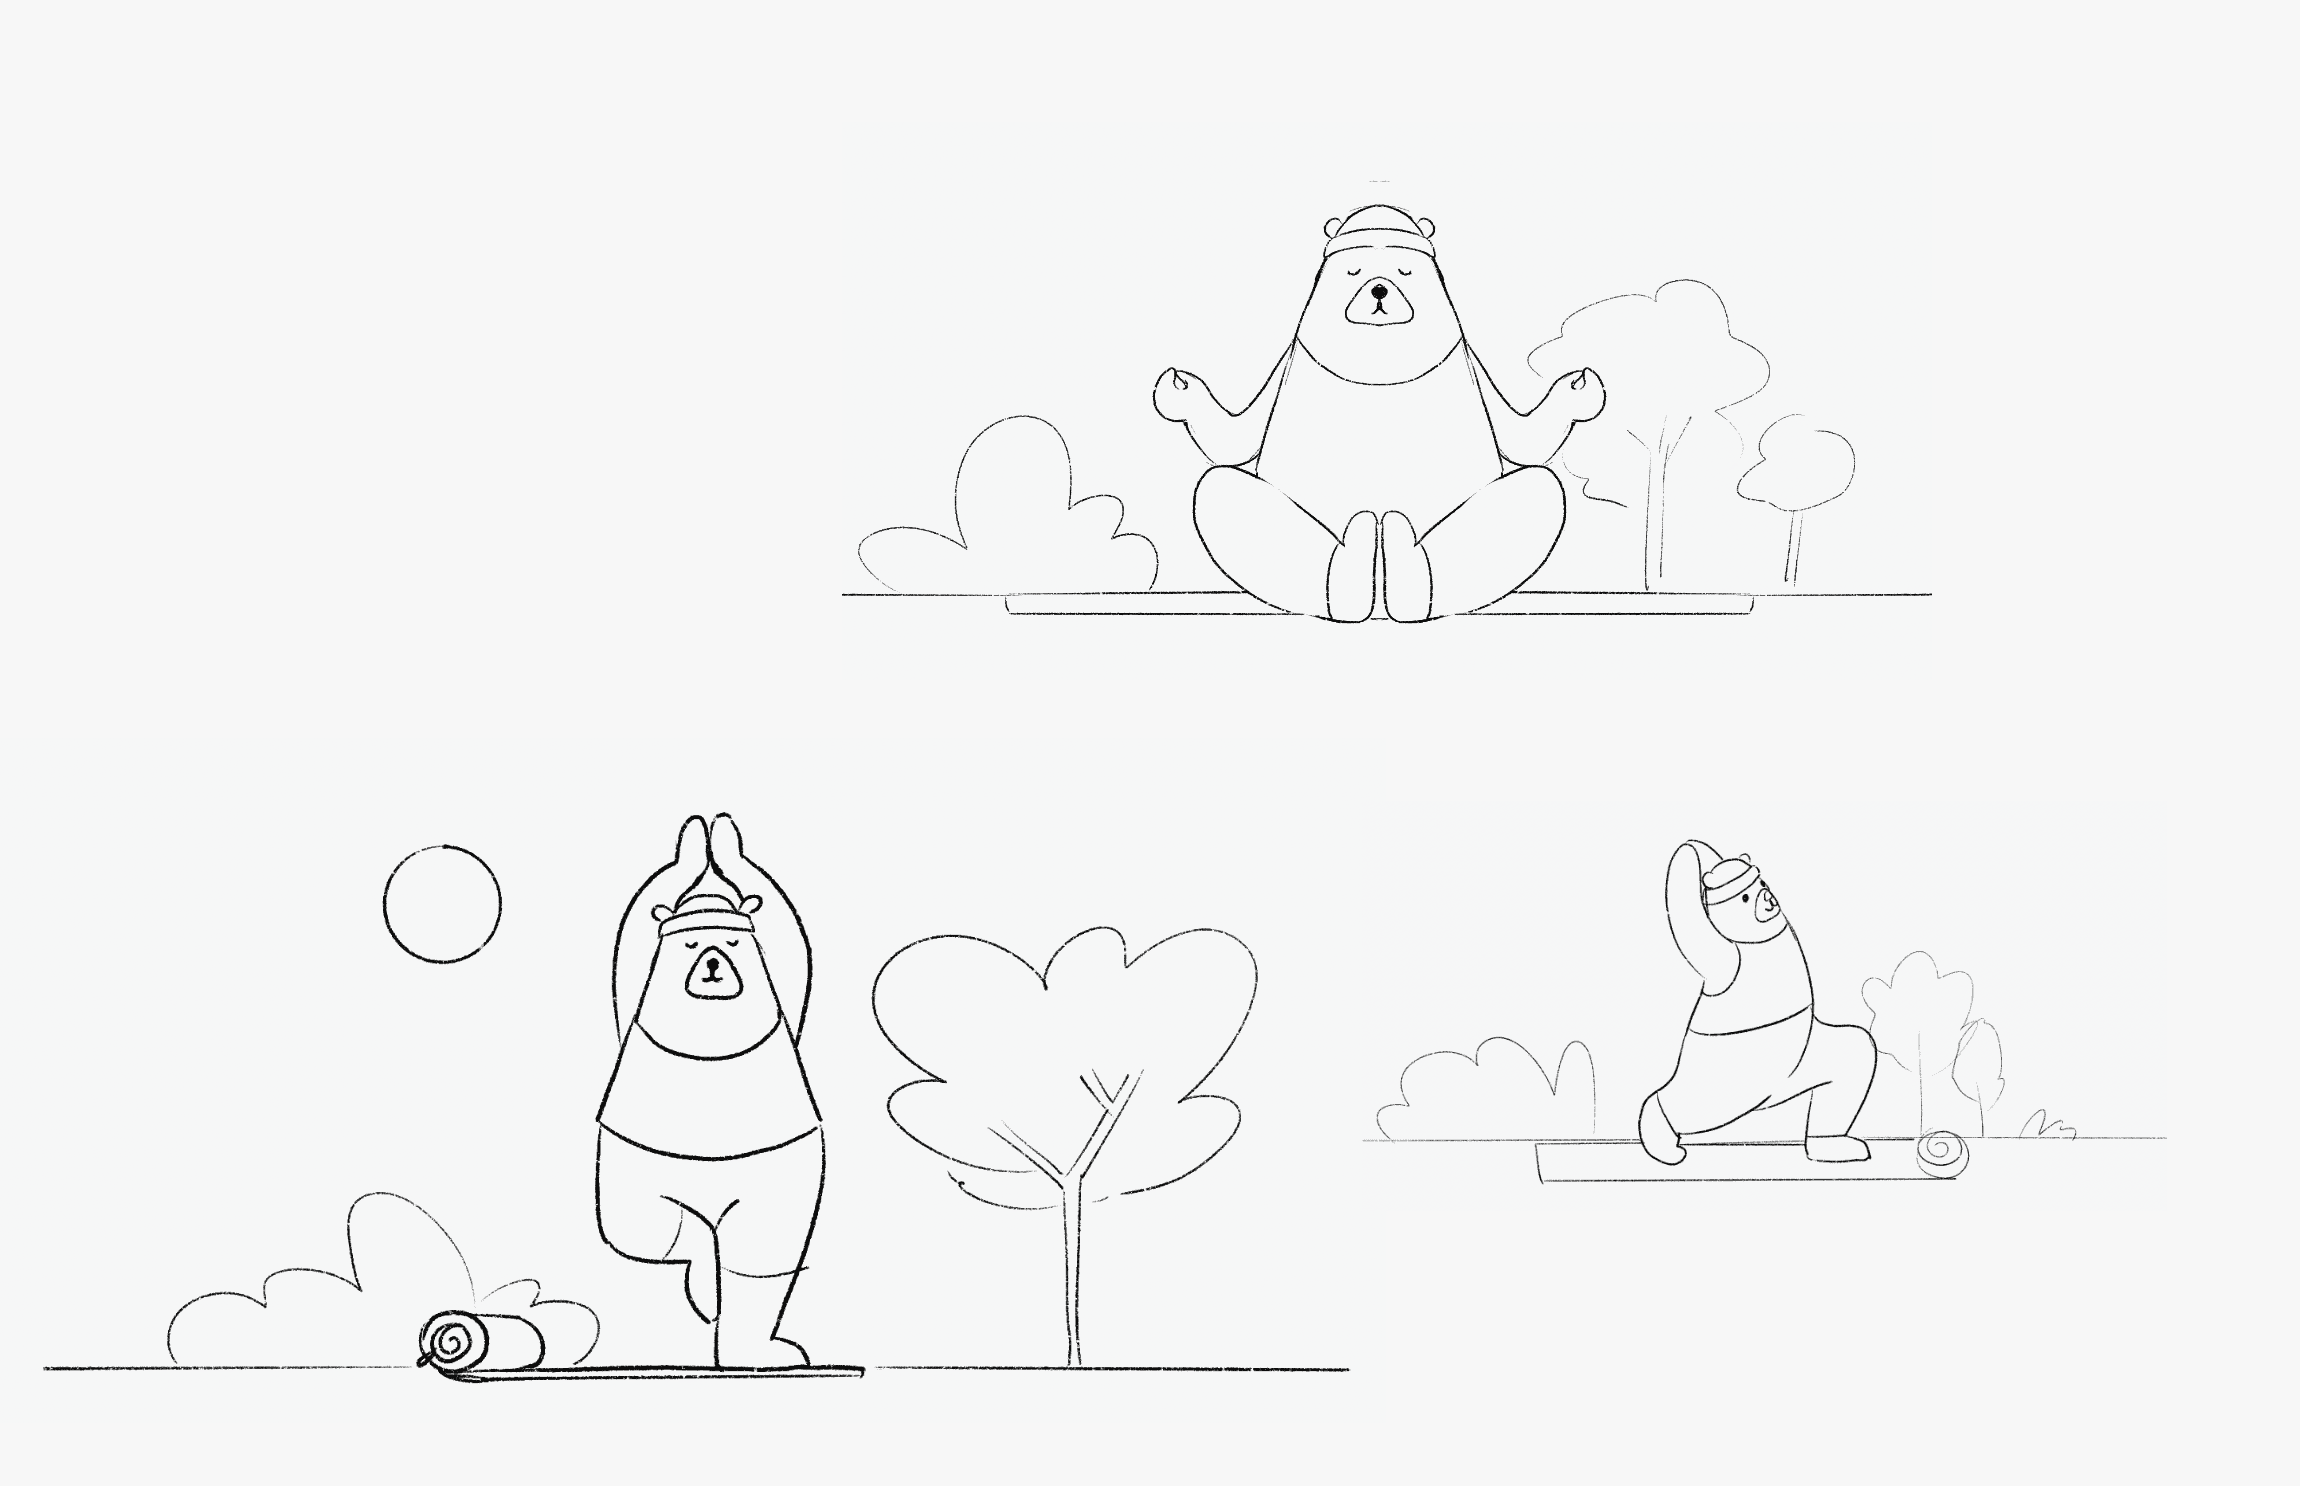 Assumption Life bear character sketches